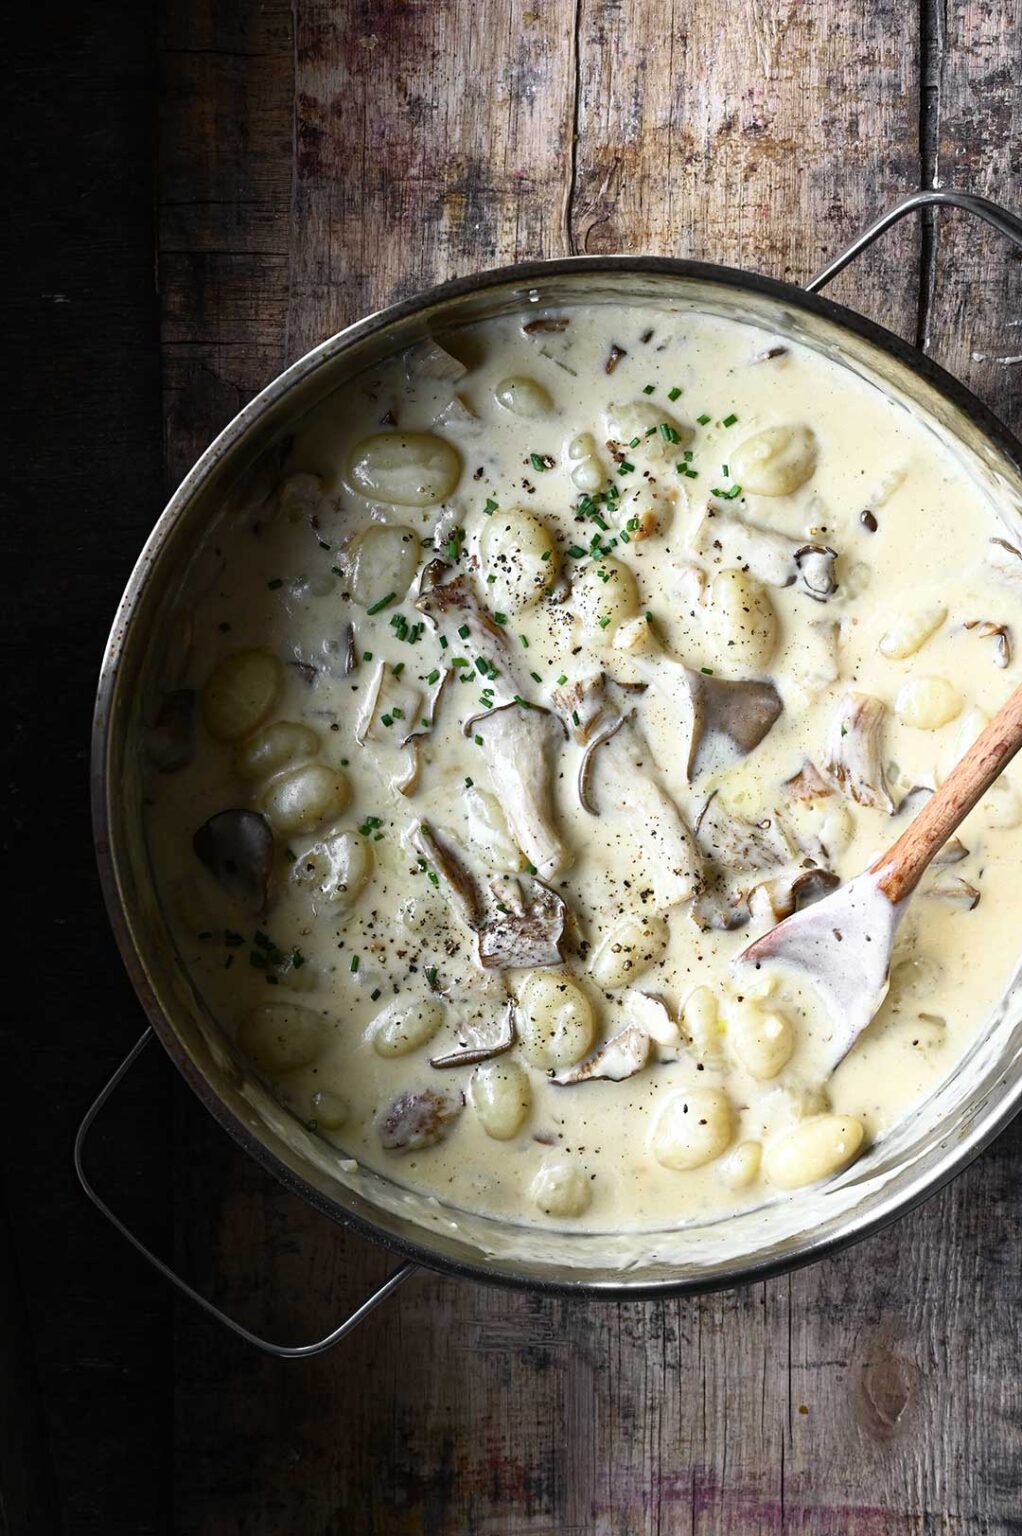 15 minute One-Pot Creamy Mushroom Gnocchi - Serving Dumplings